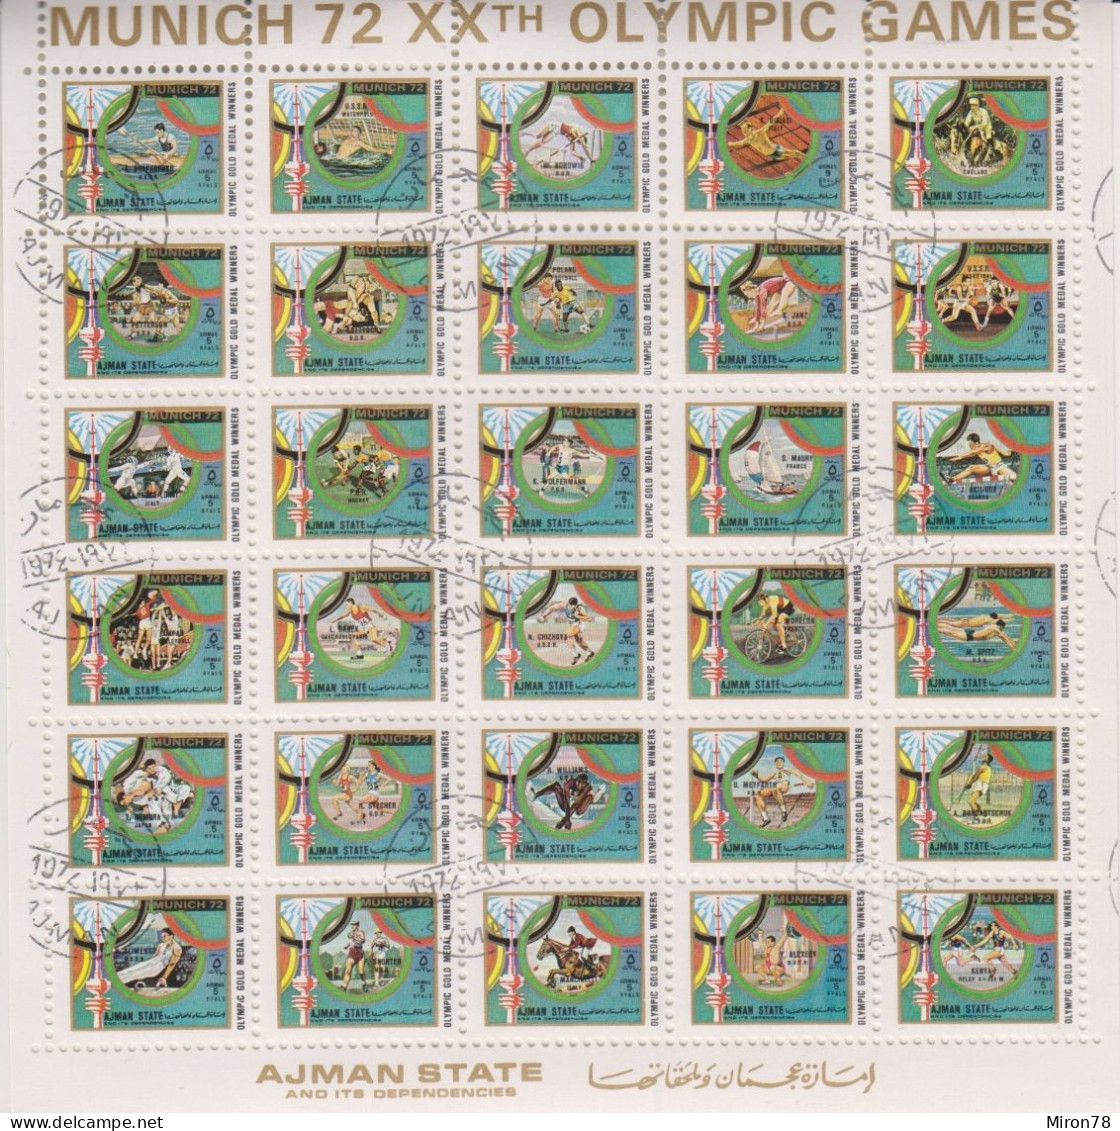 AJMAN 1972: Olympic Games  MiNr. 1605-1634 Used - Ete 1972: Munich